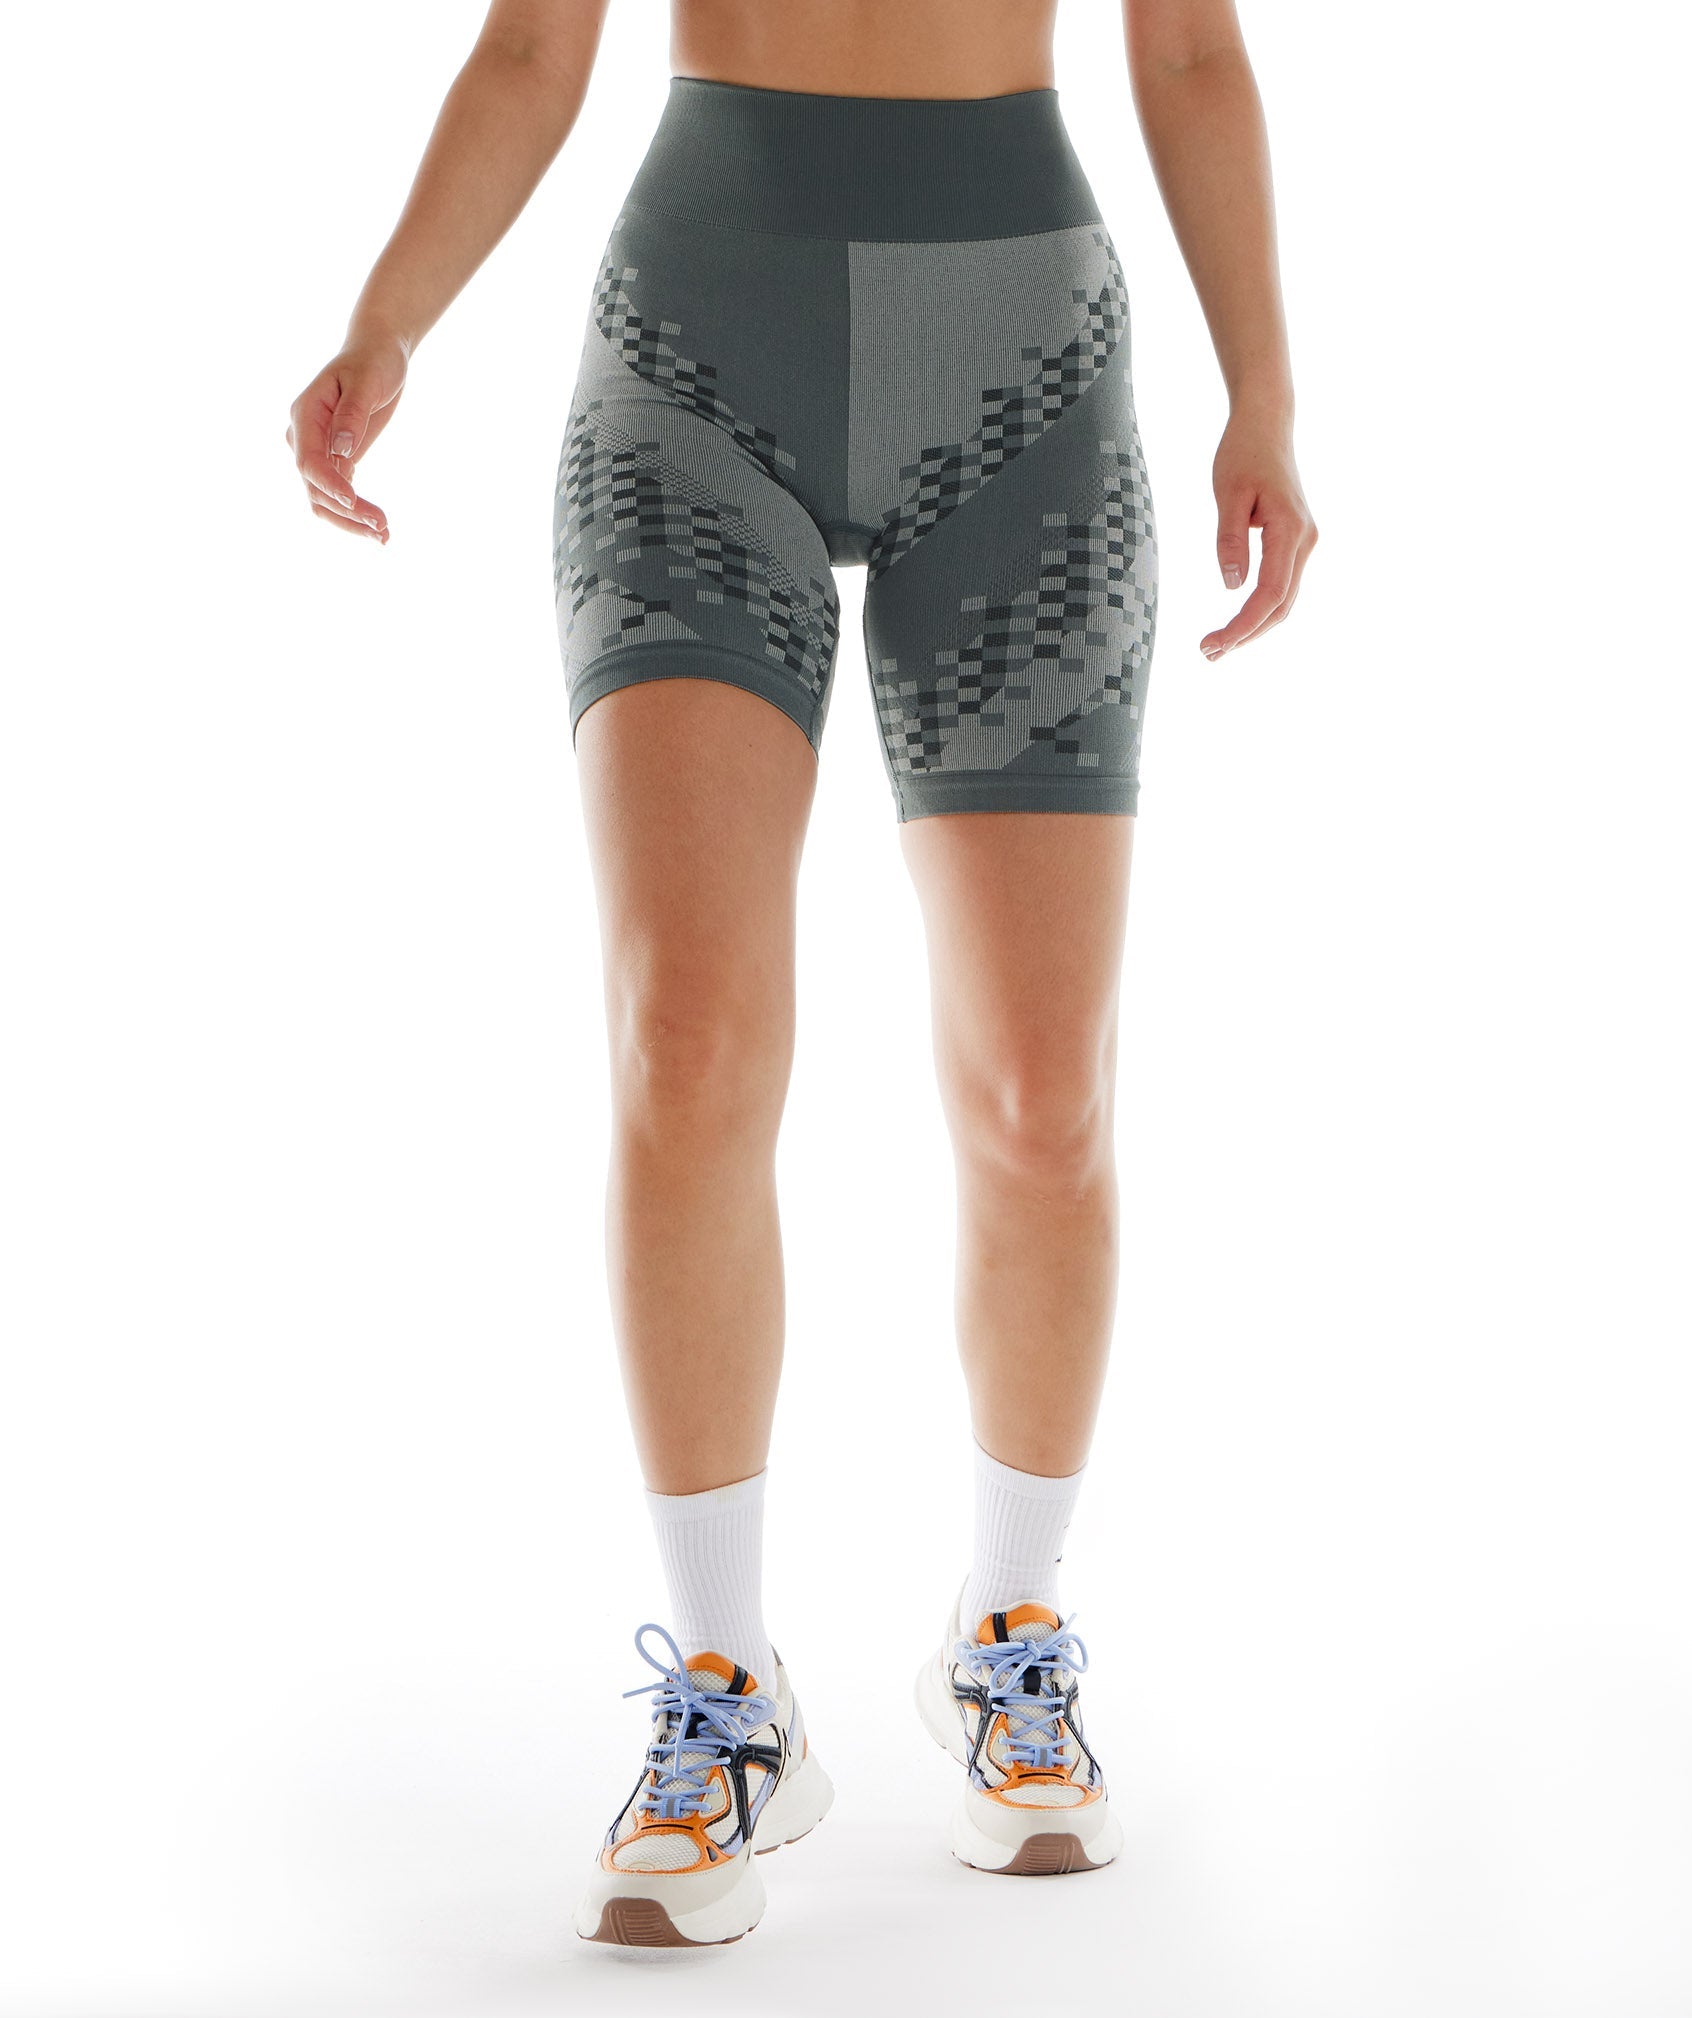 Wtflex Cyborg Seamless Cycling Shorts in Charcoal Grey/Black/Light Grey - view 1